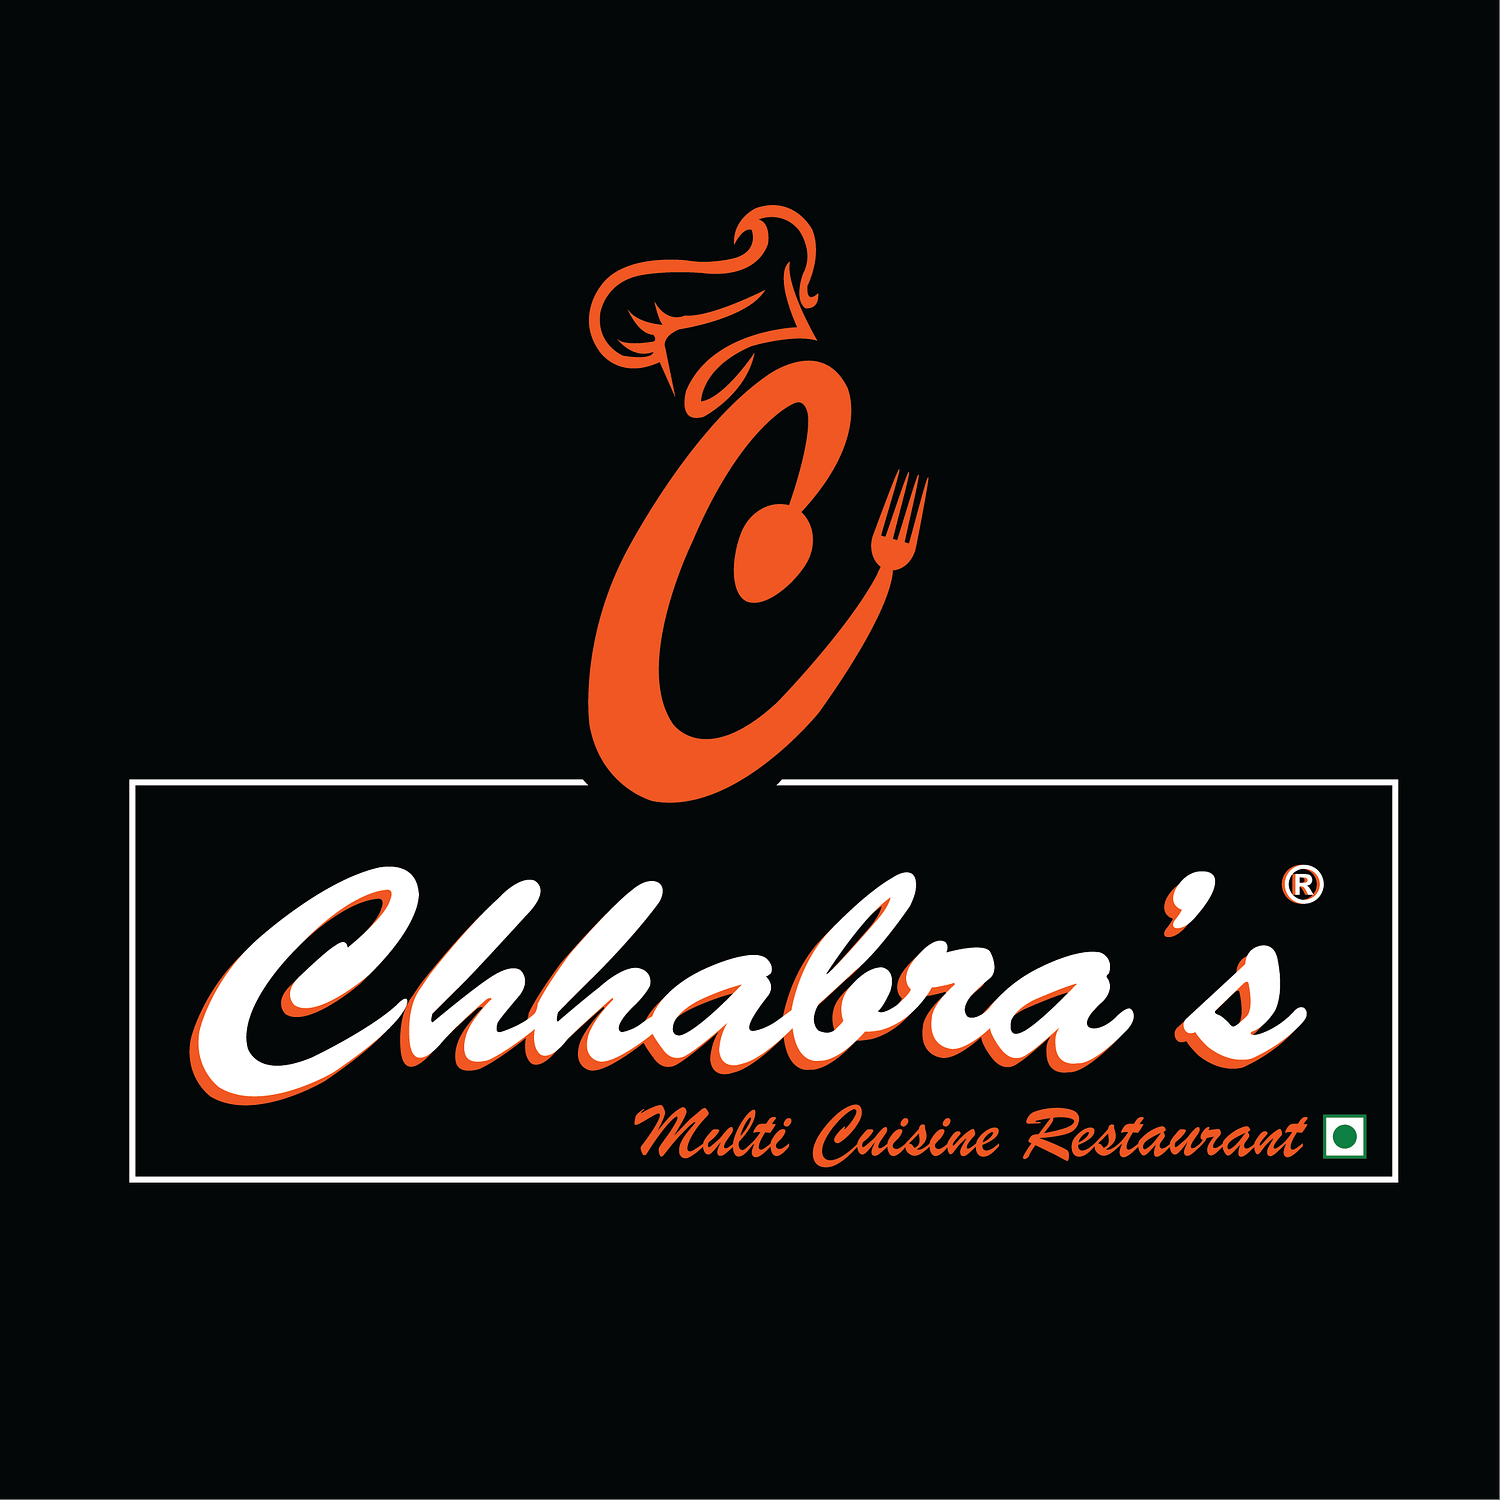 Chhabras